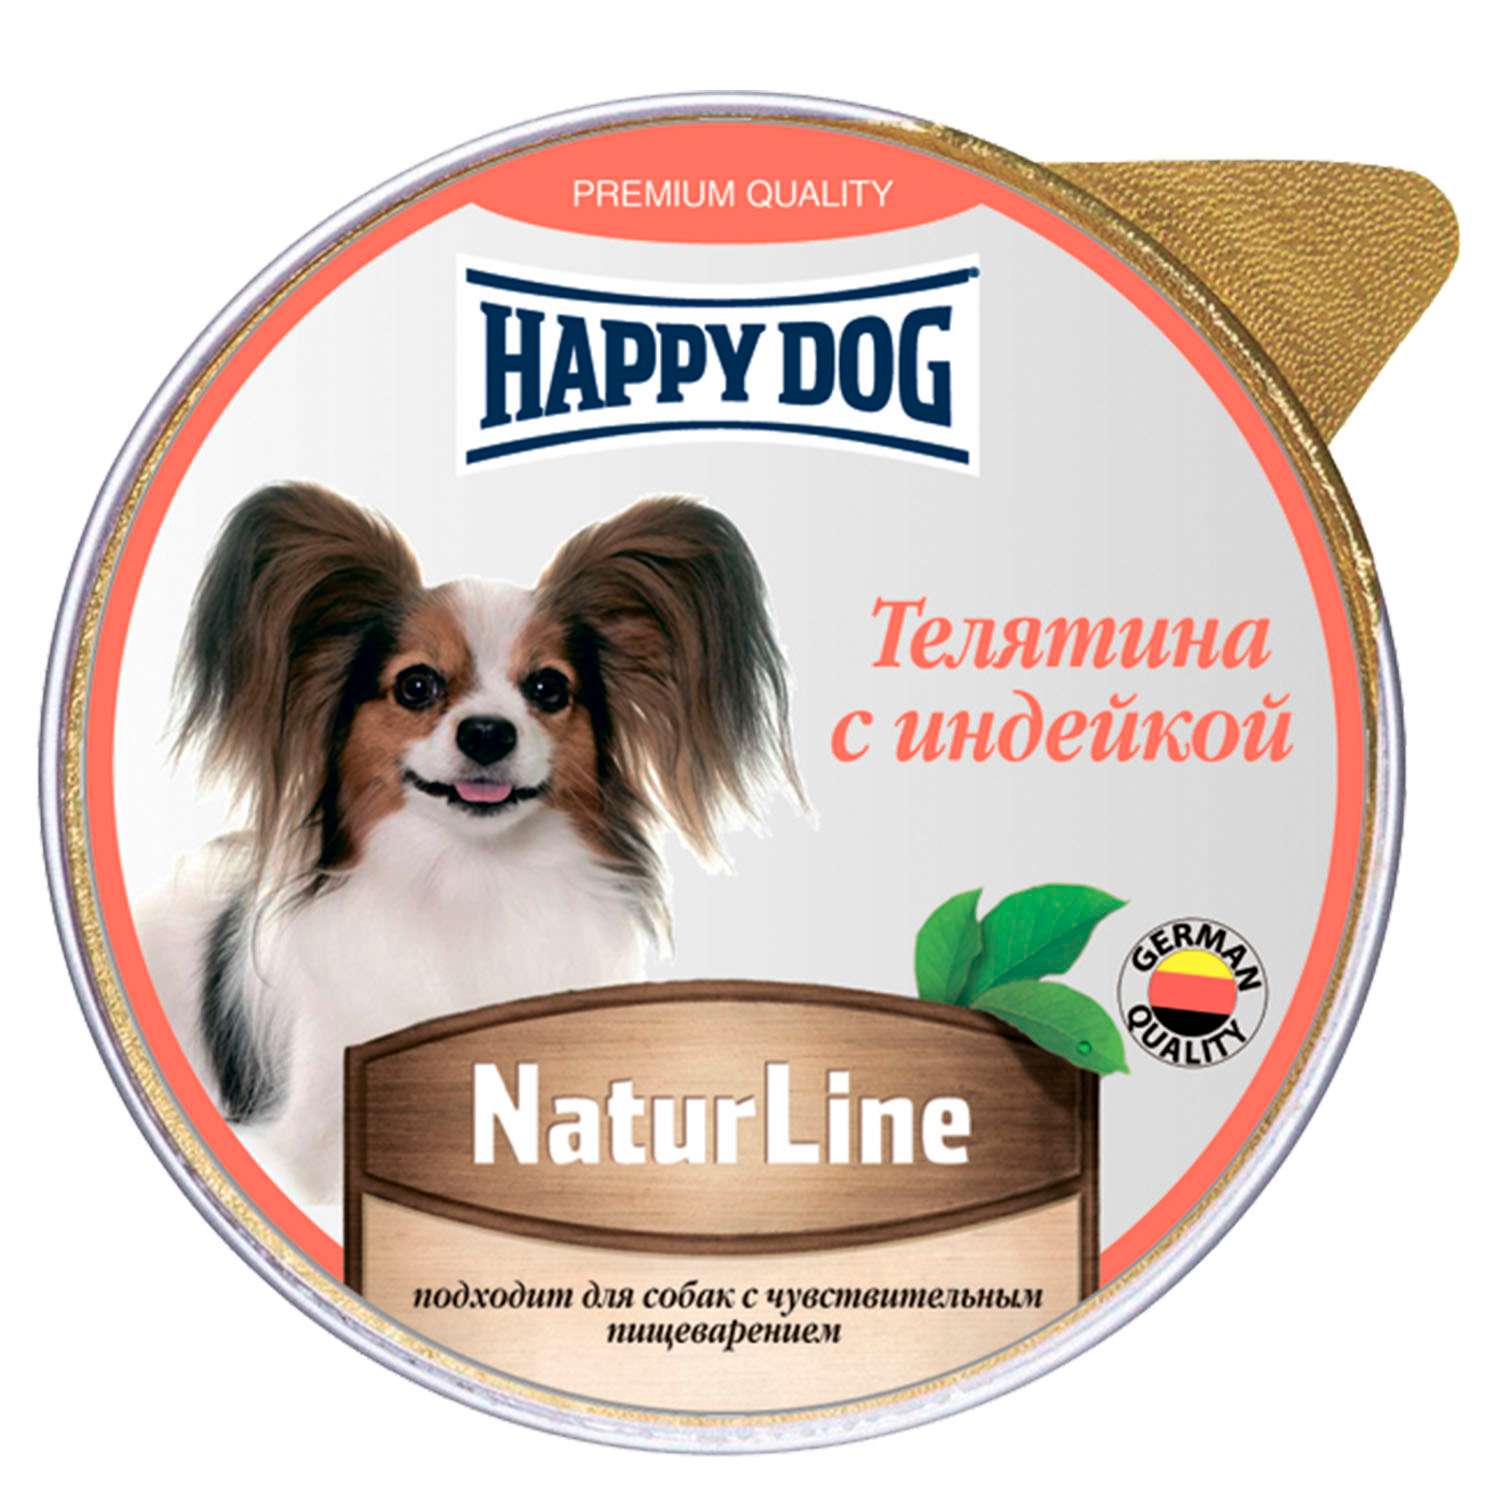 Корм для собак Happy Dog телятина с индейкой 125г - фото 2